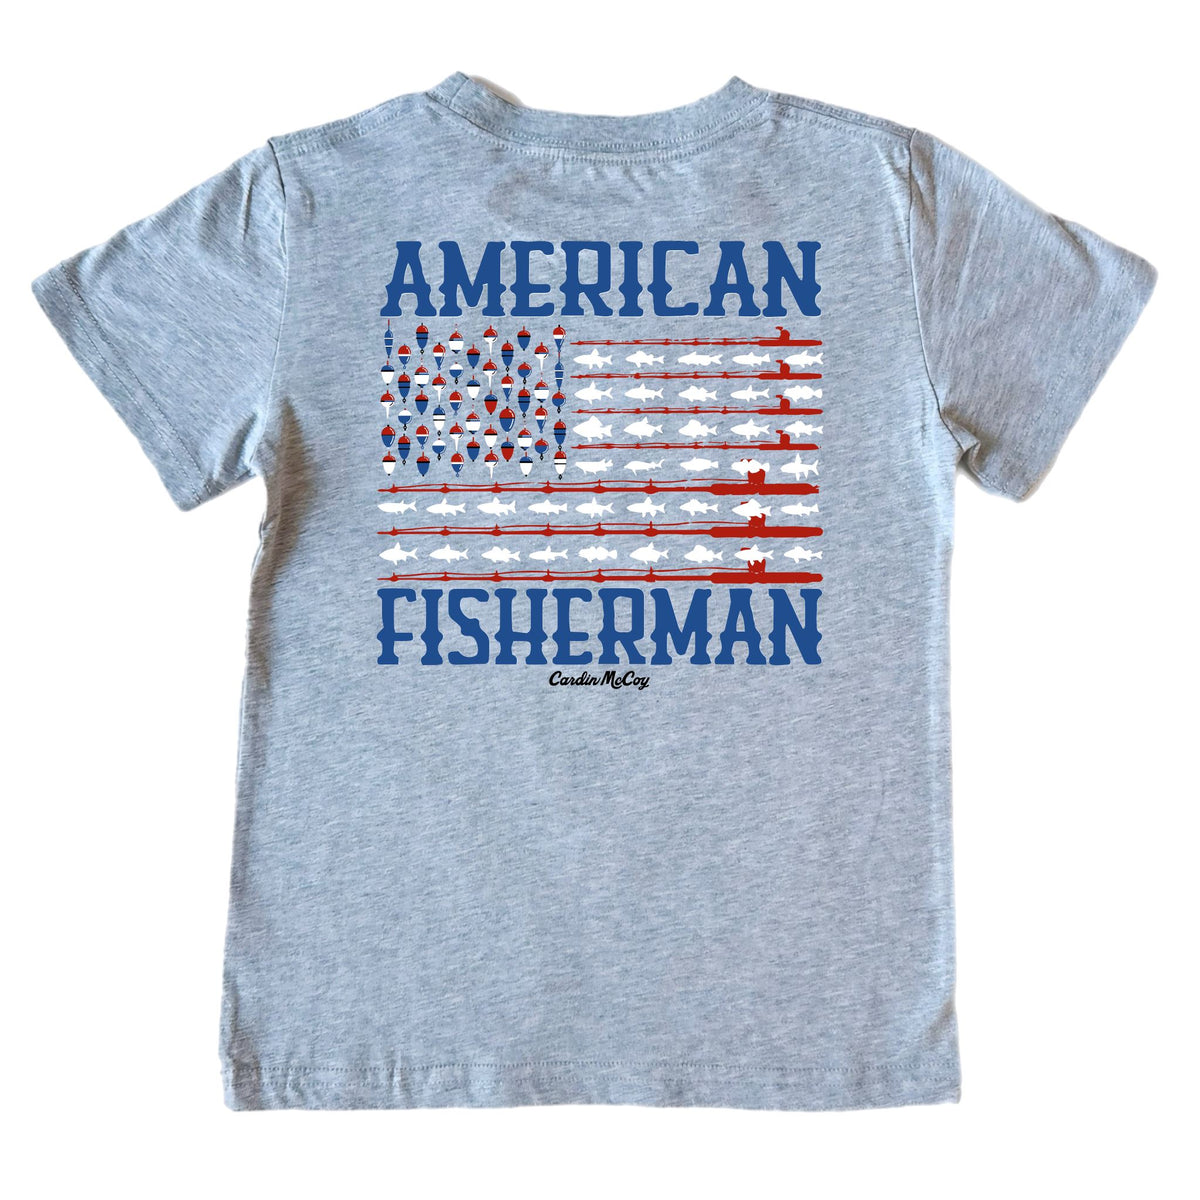 Boys' American Fisherman Short-Sleeve Tee Short Sleeve T-Shirt Cardin McCoy Heather Gray XXS (2/3) Pocket